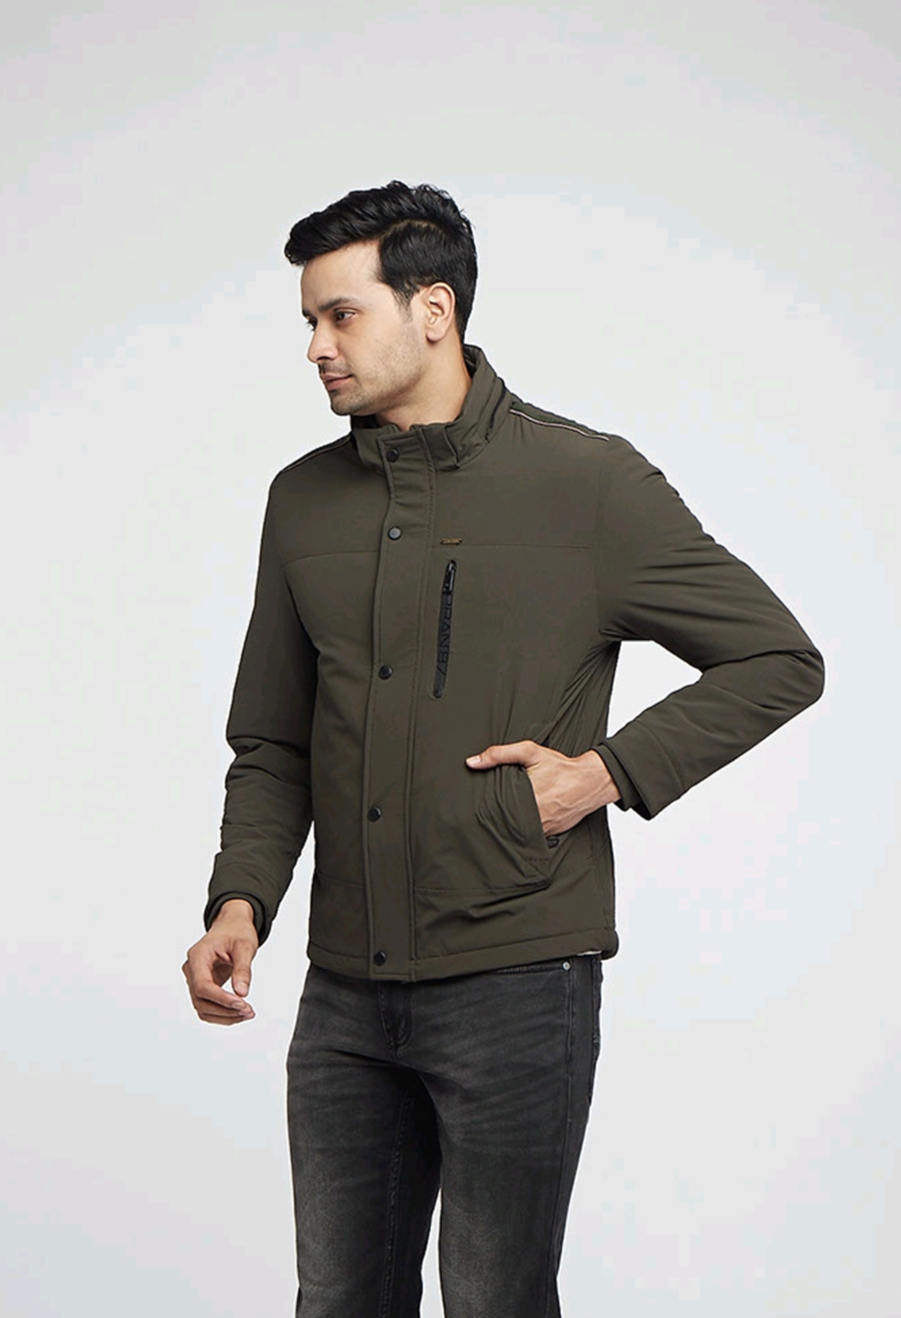 Olive Green Lightweight Waterproof Fleece Lined Jacket | Men